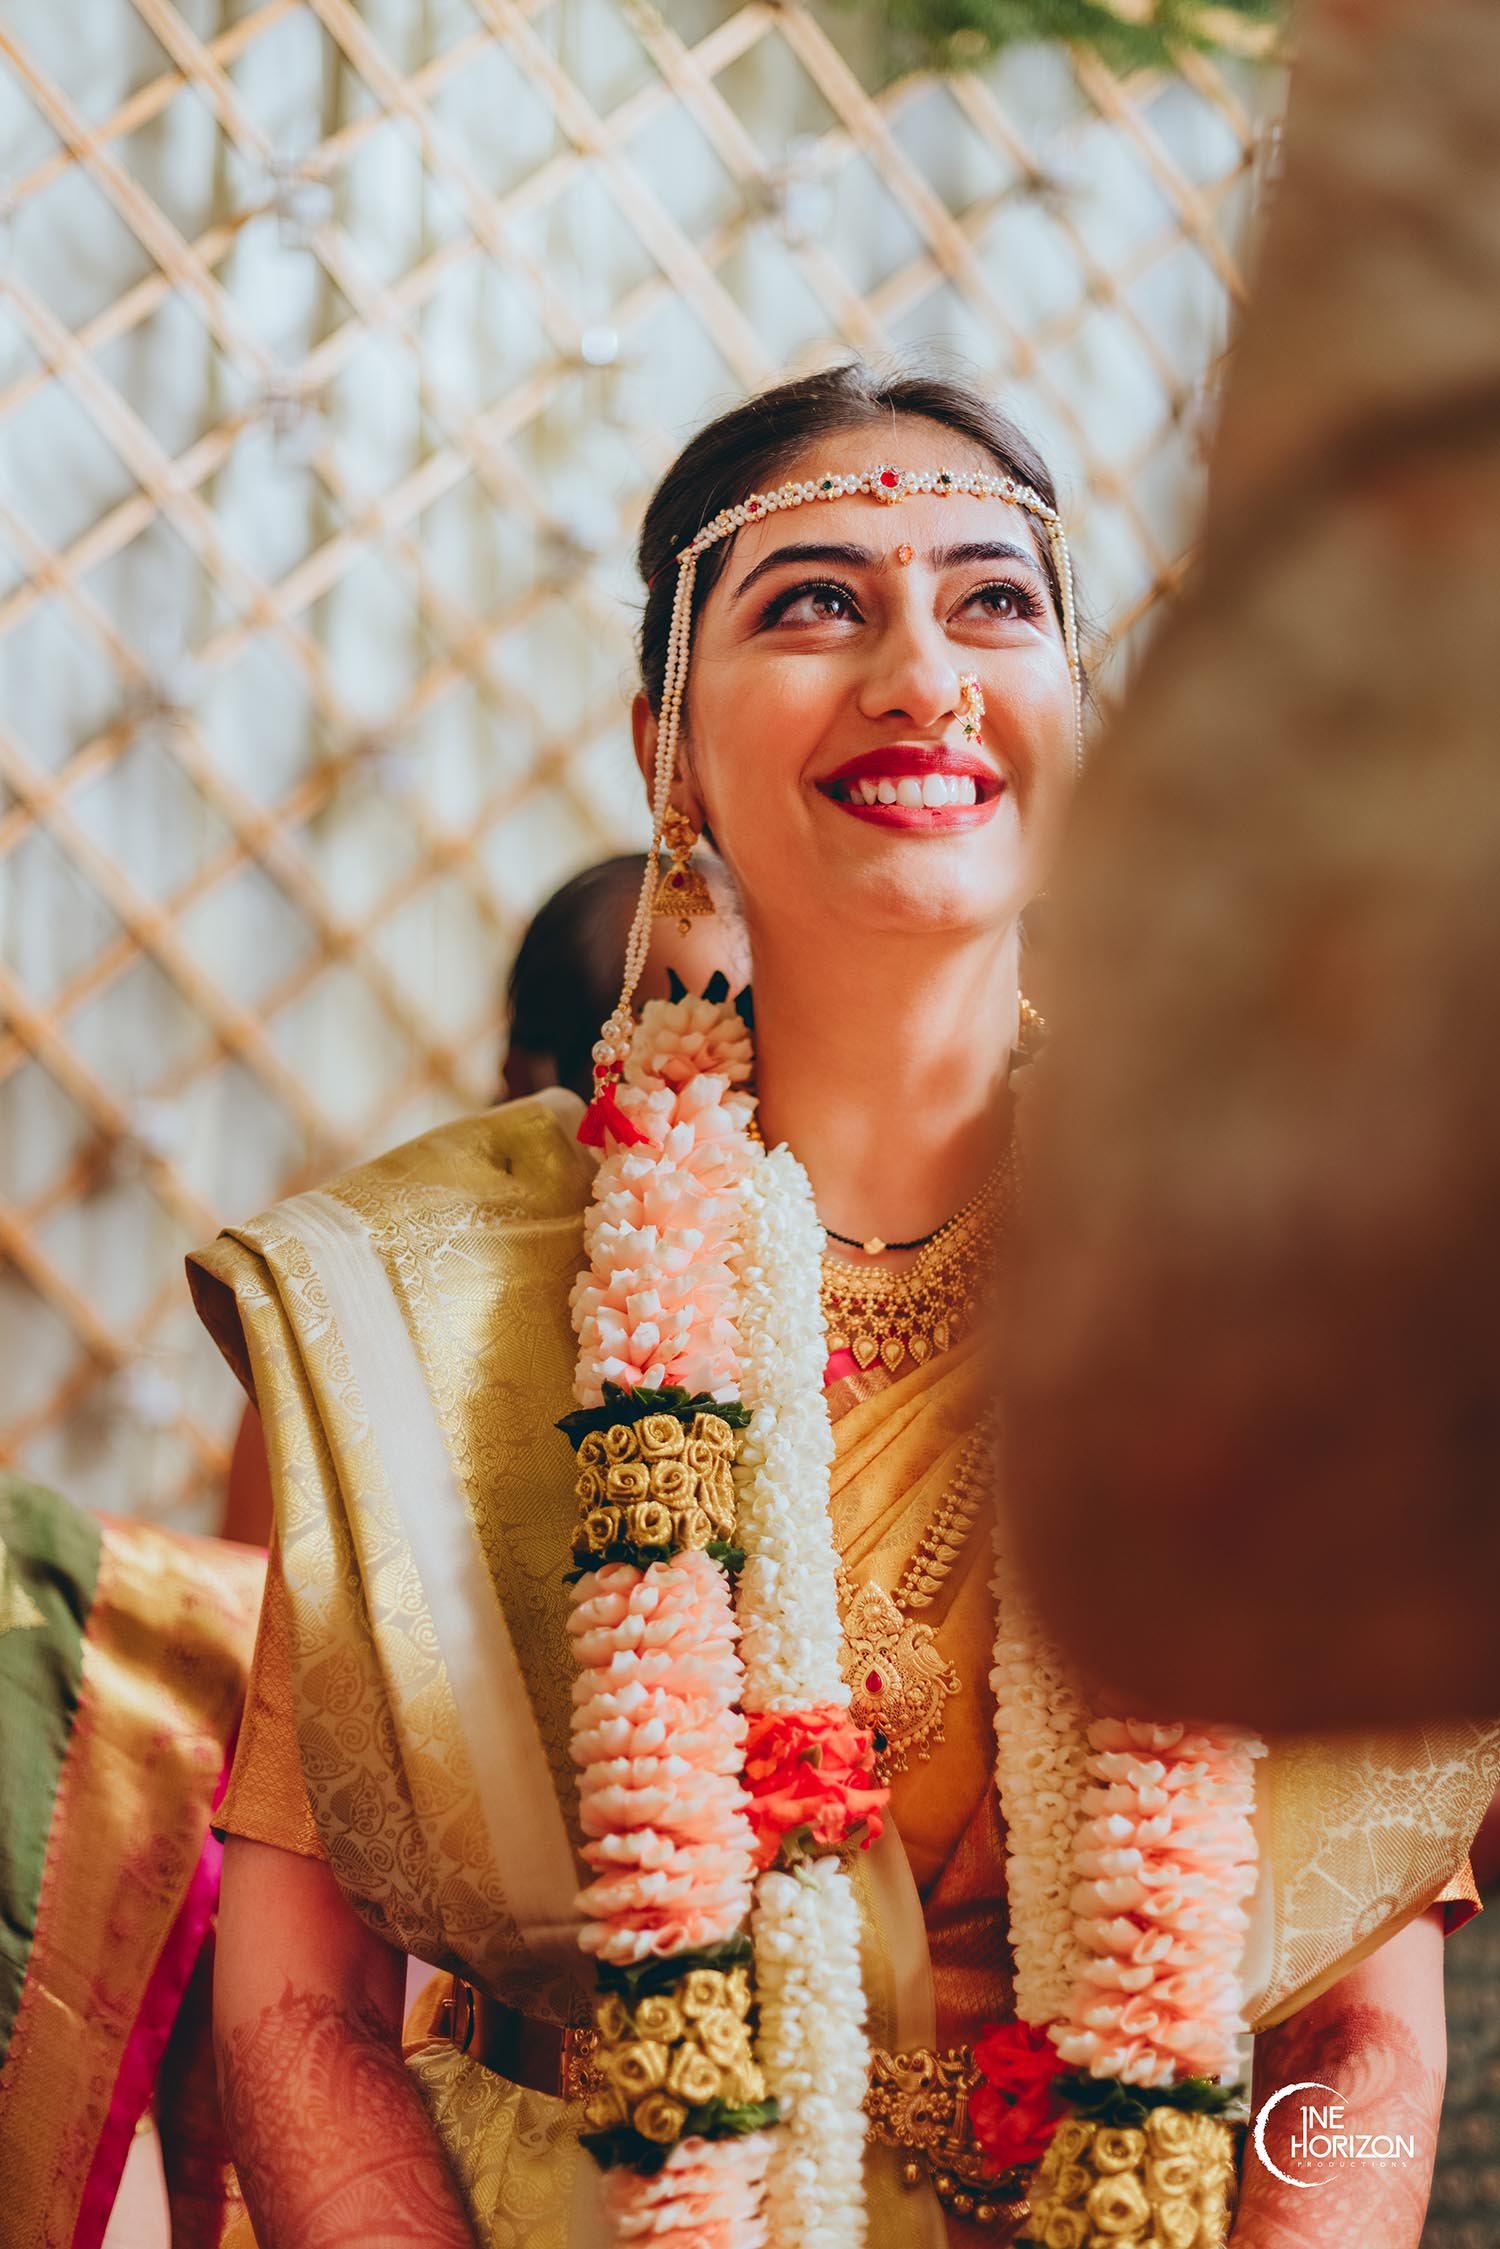 Indian wedding portrait photography turorial | poses for bride | Marathi |  Ep 5 | Prateek Bawkar - YouTube